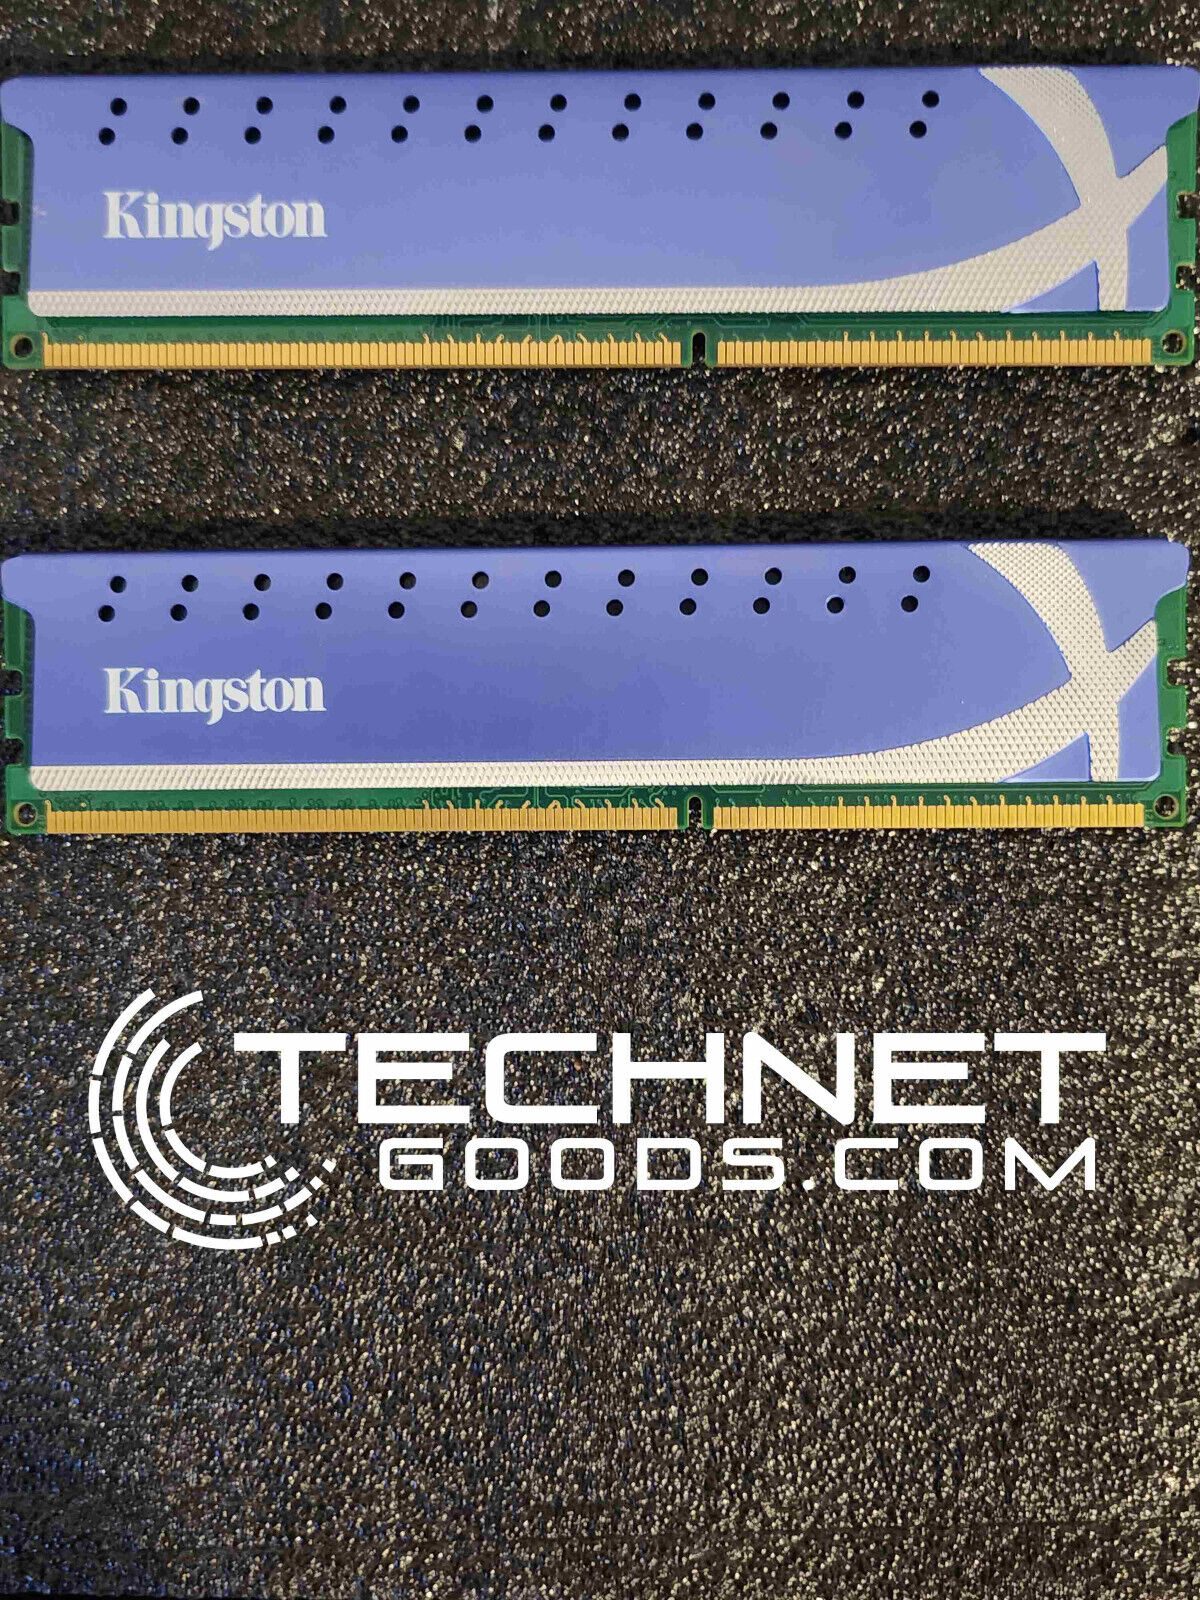 Kingston HyperX Genesis 2x4GB DDR3 1600MHz (KHX1600C9D3K2/8GX) - TESTED